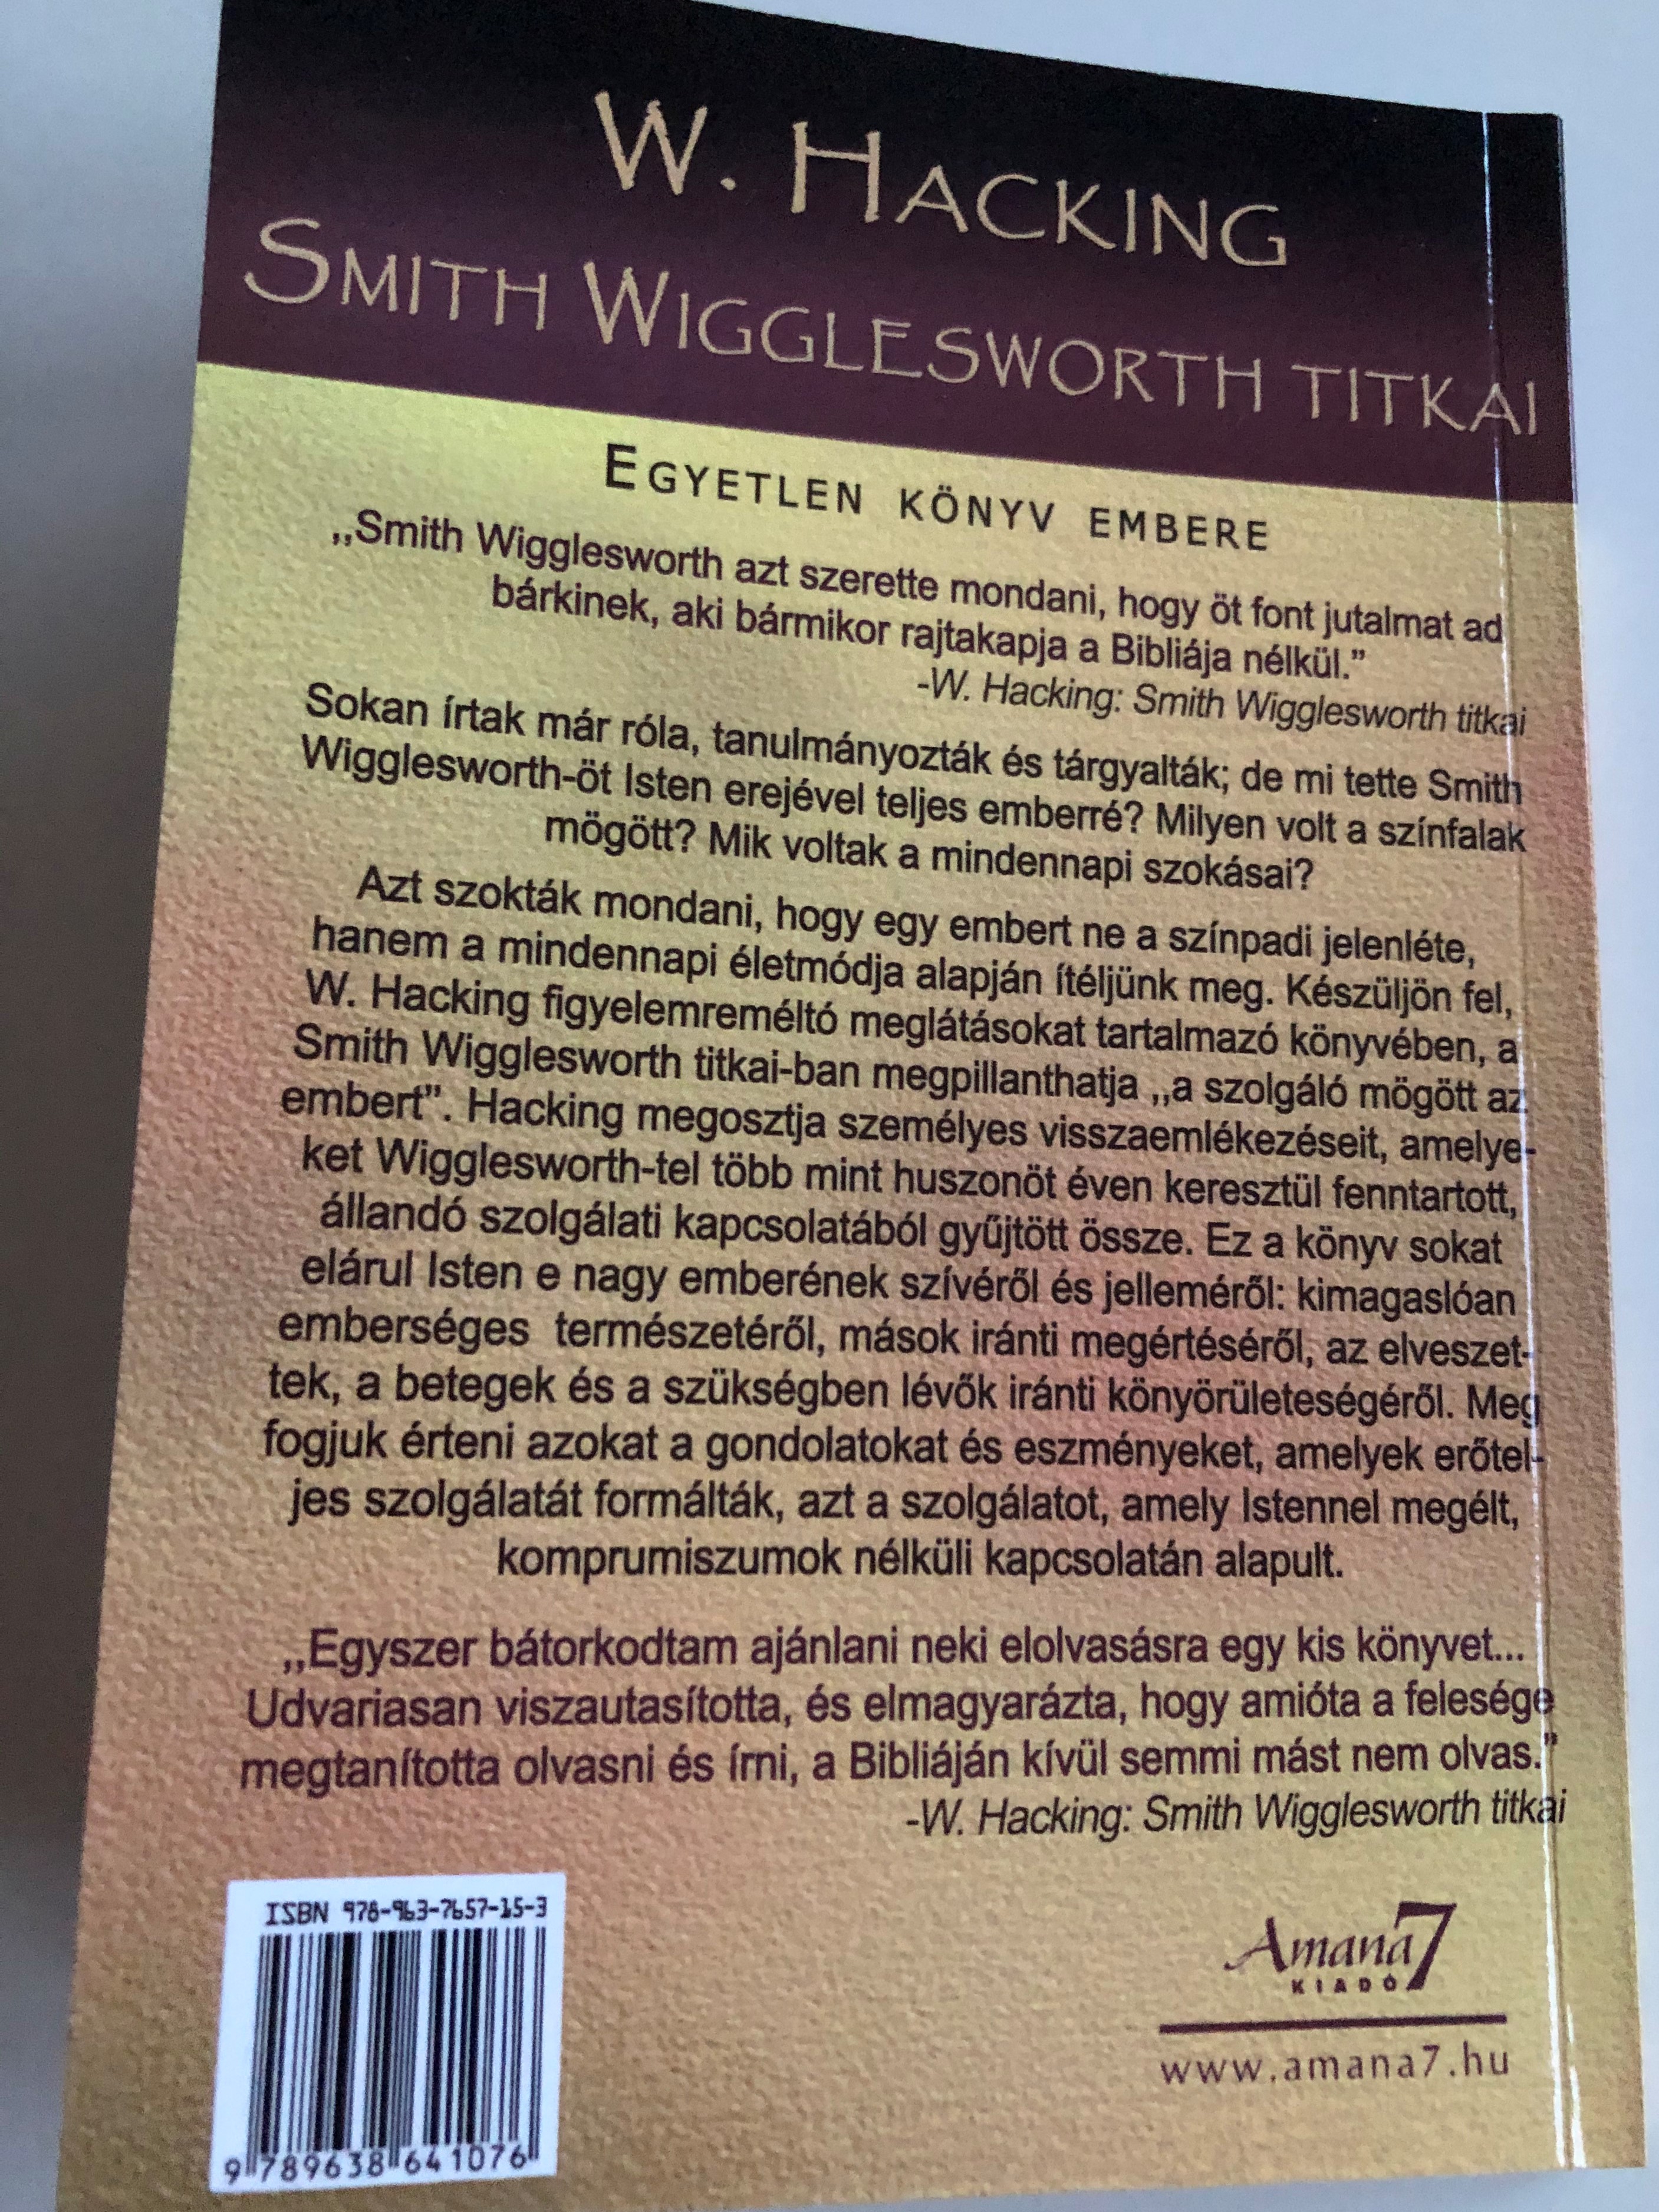 smith-wigglesworth-titkai-by-w.-hacking-hungarian-edition-of-secrets-of-smith-wigglesworth-8-.jpg